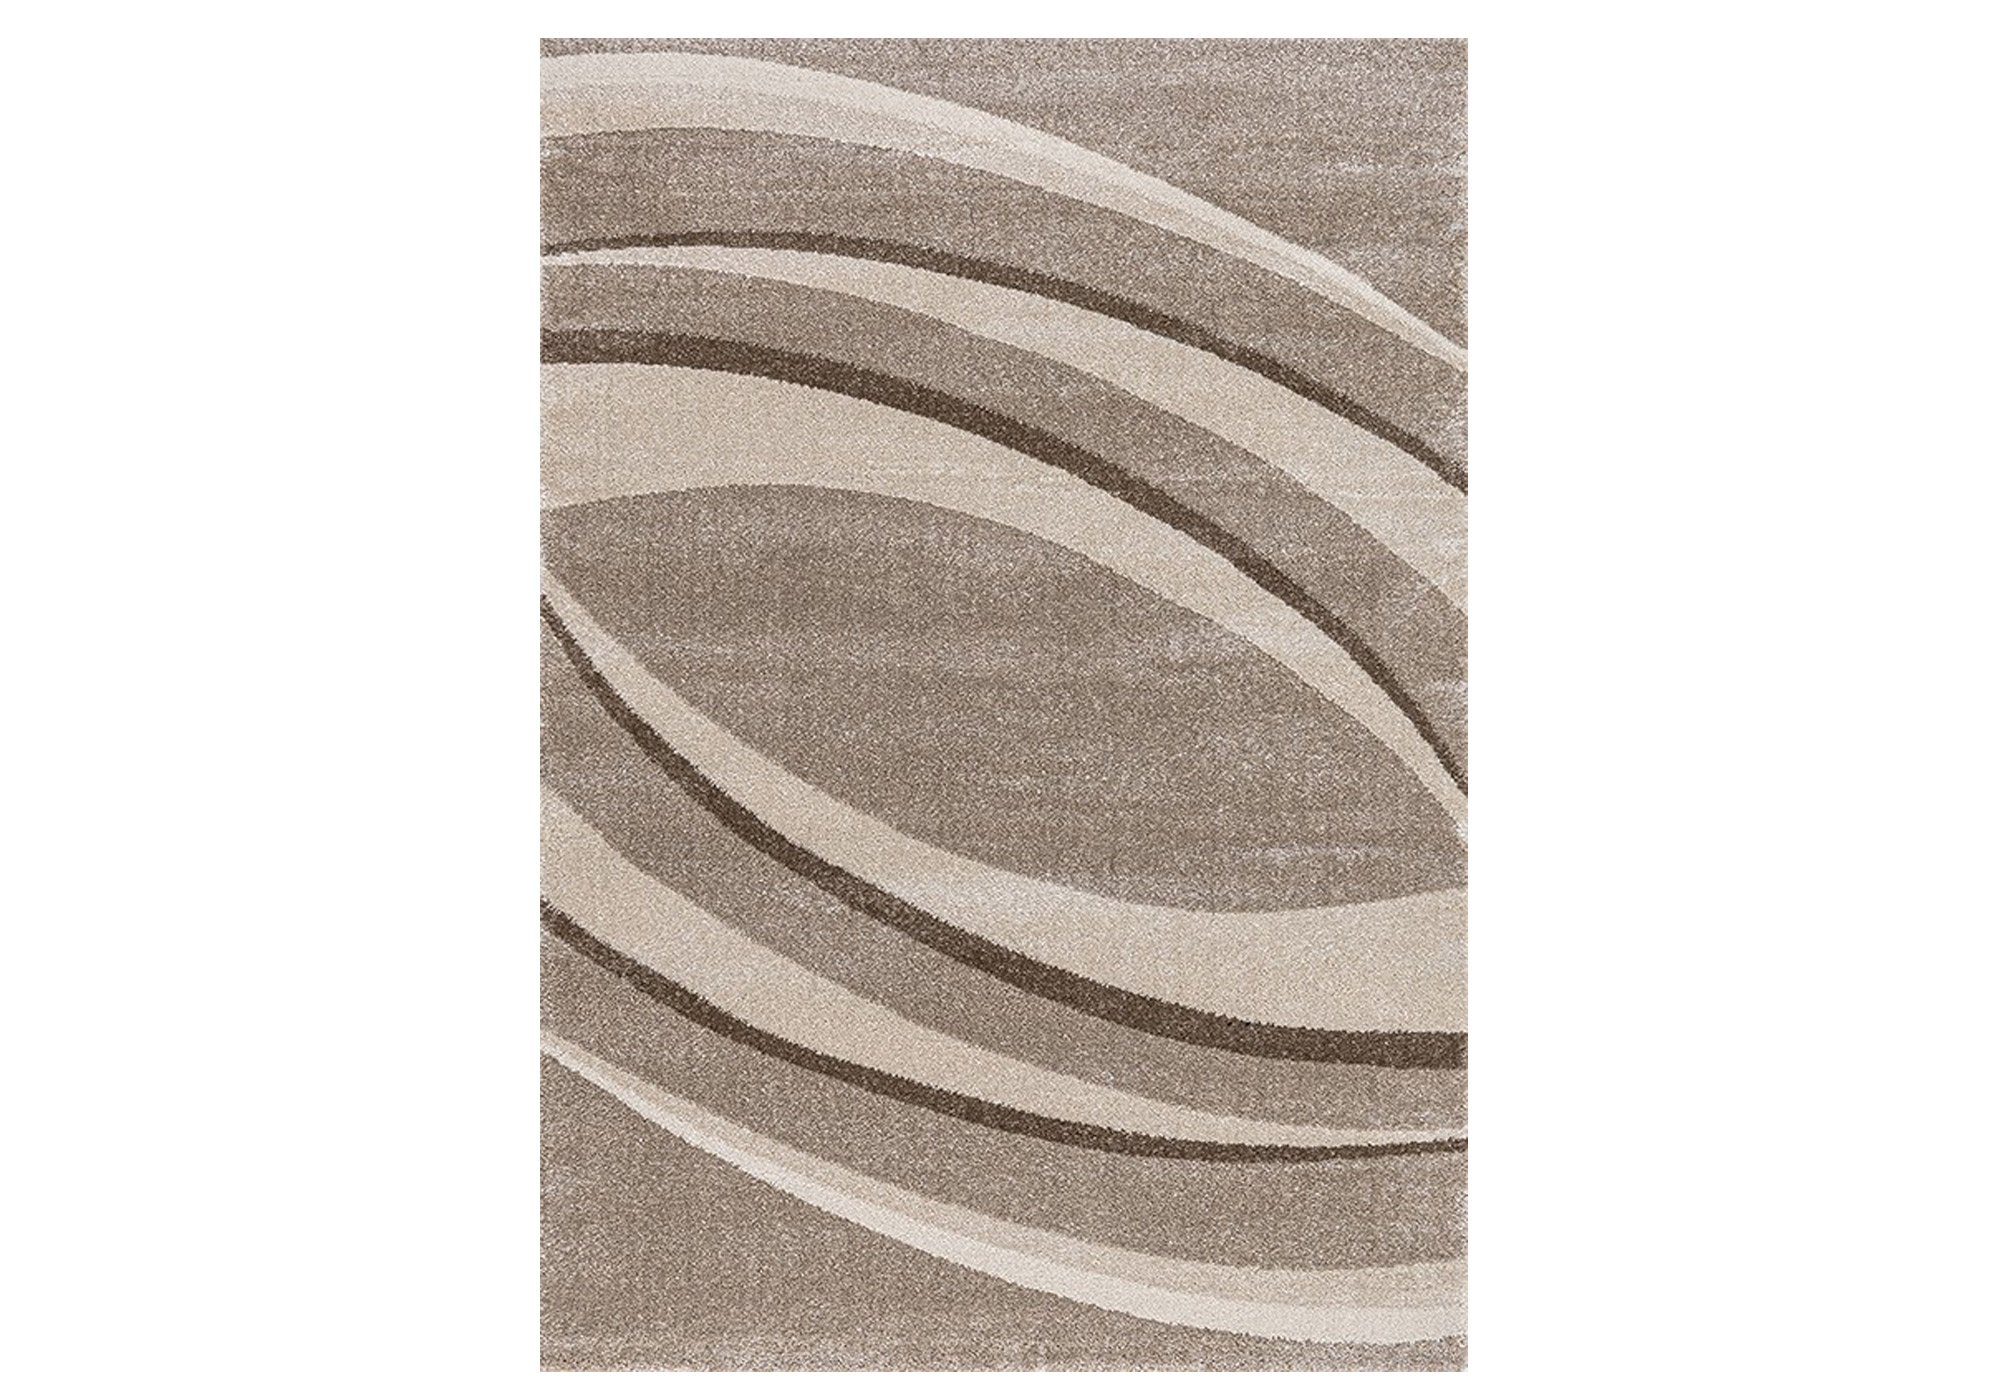 Festival Teppich 160 x 230 cm - beige - 11,5 mm Höhe - Relax 230